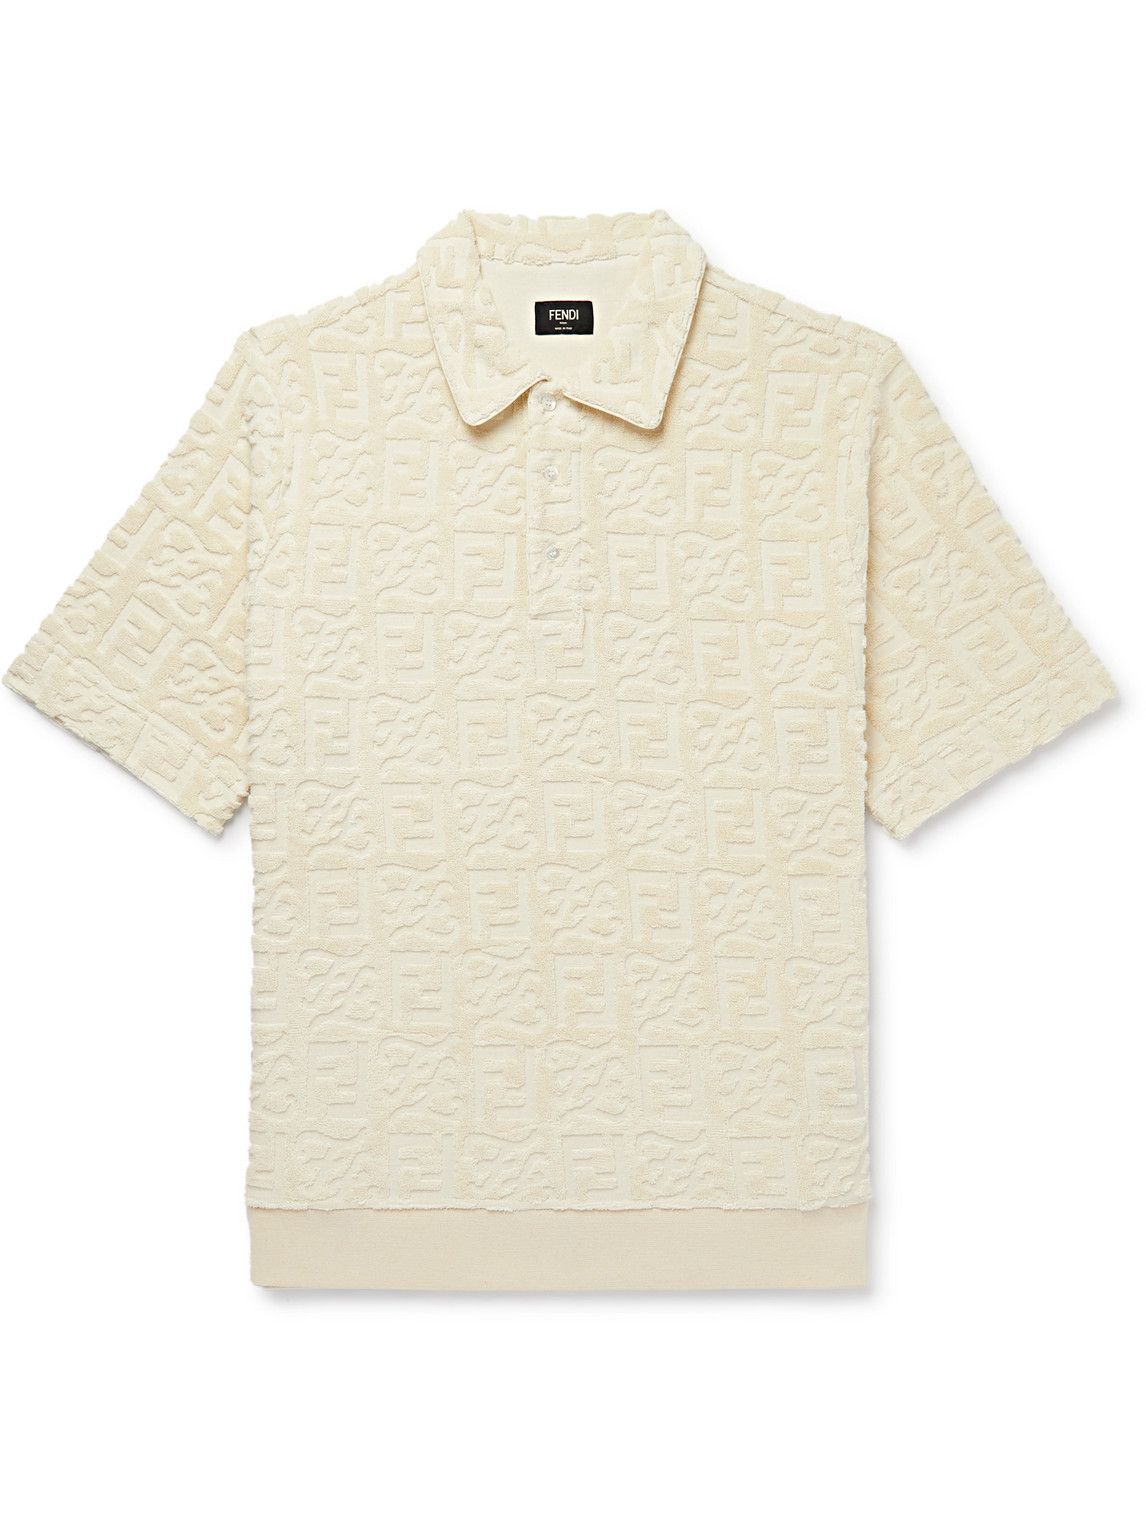 Fendi - Floral-Print Silk-Twill Shirt - White Fendi